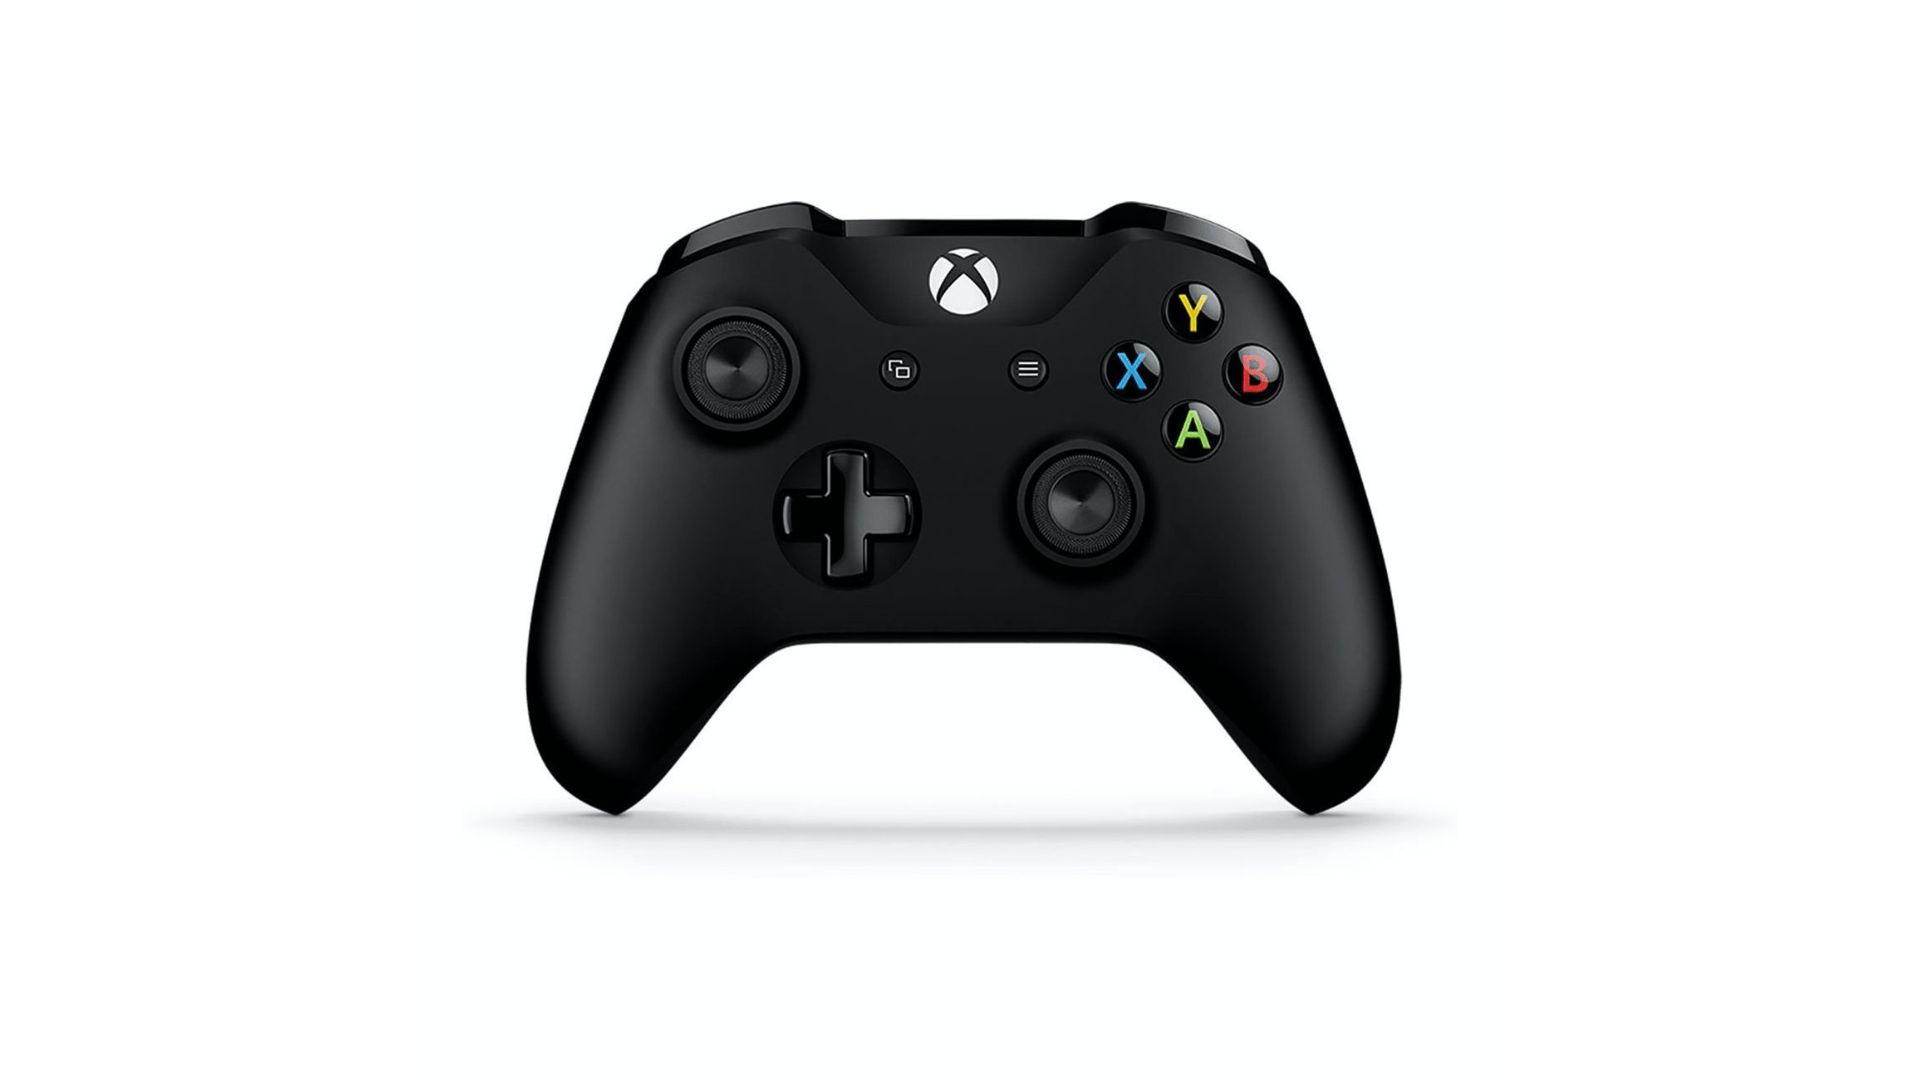 Microsoft's Xbox One S controller.